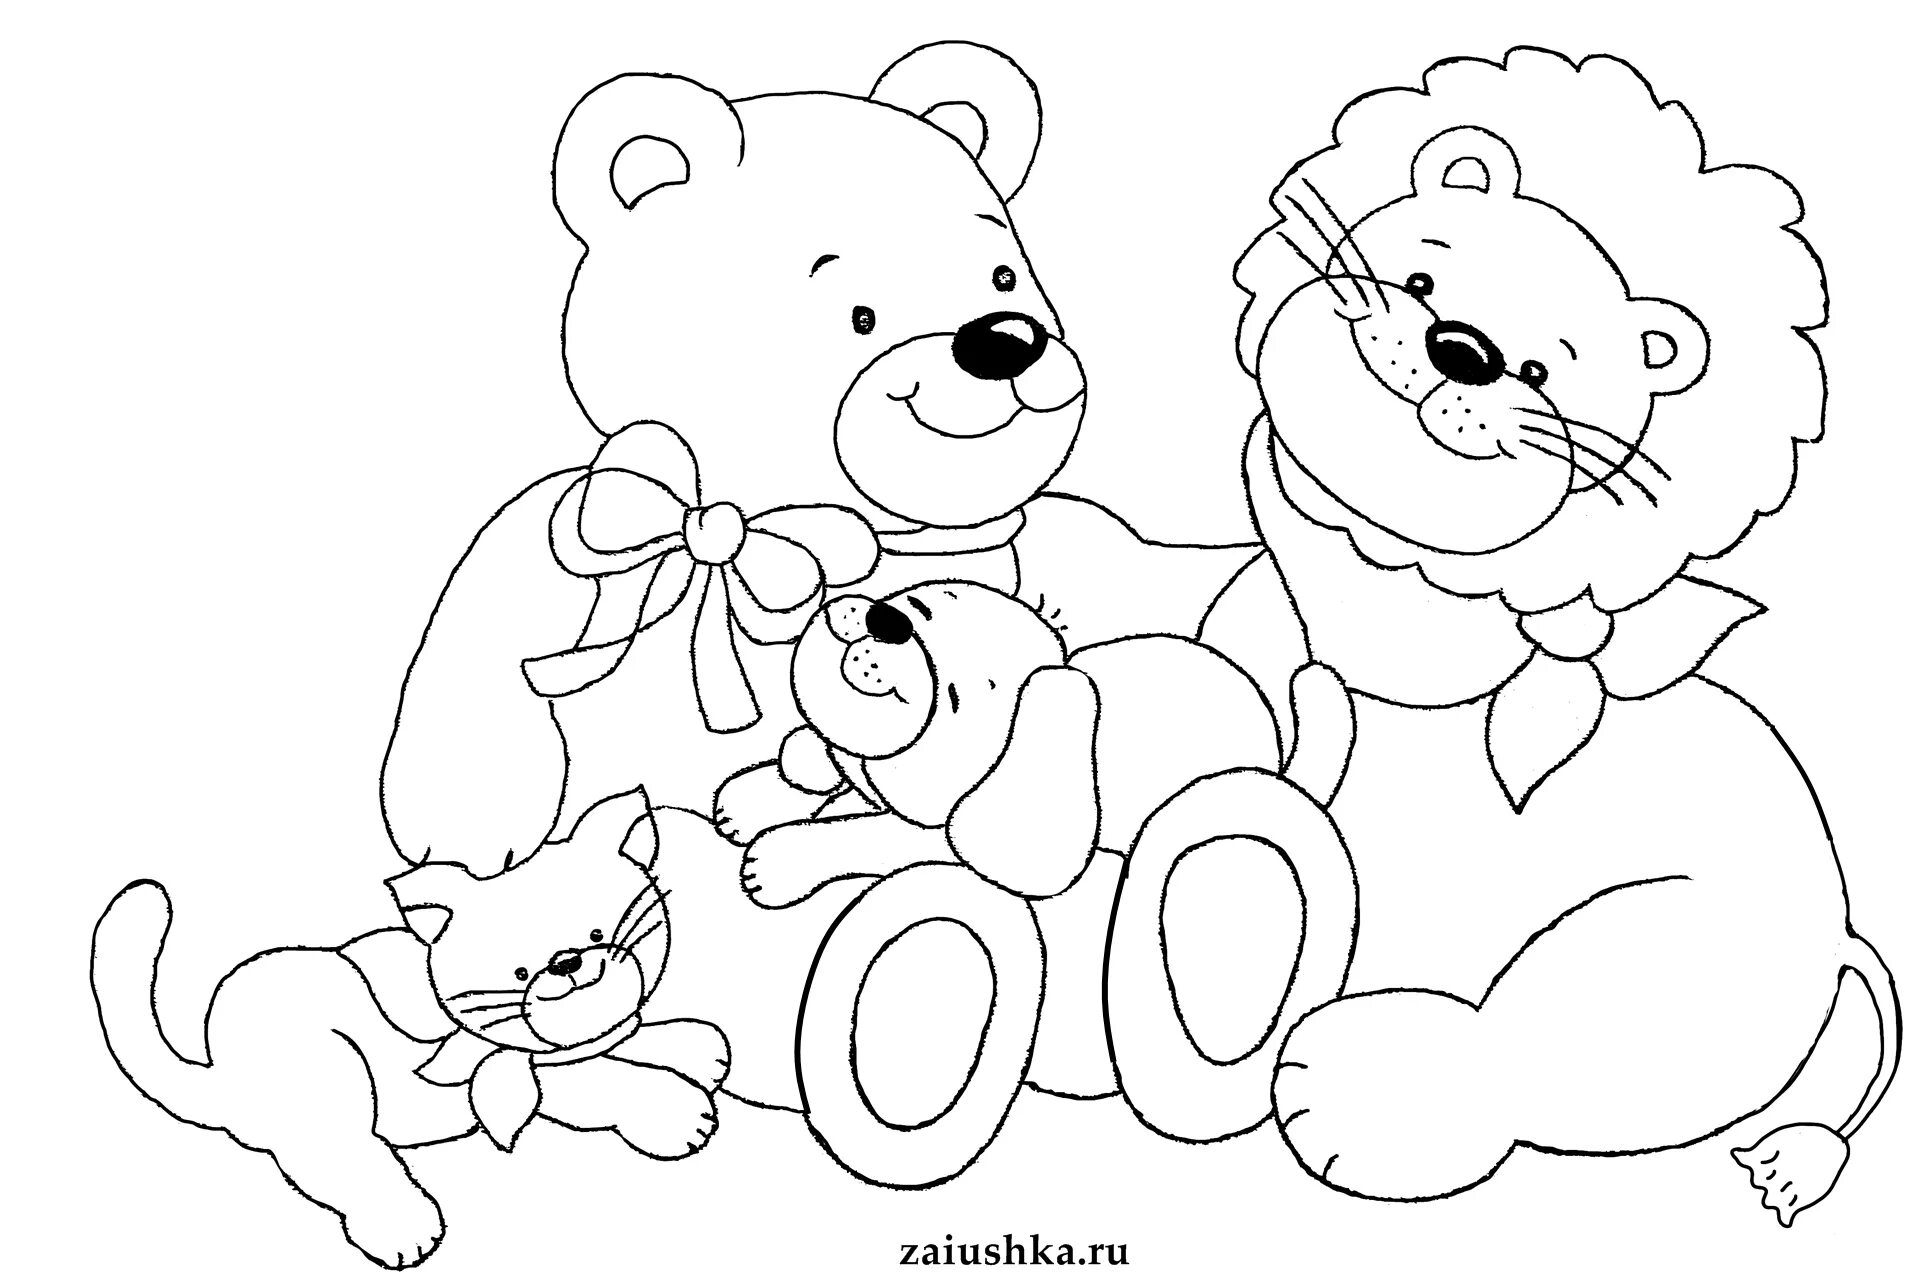 Colorful and joyful teddy bear coloring book